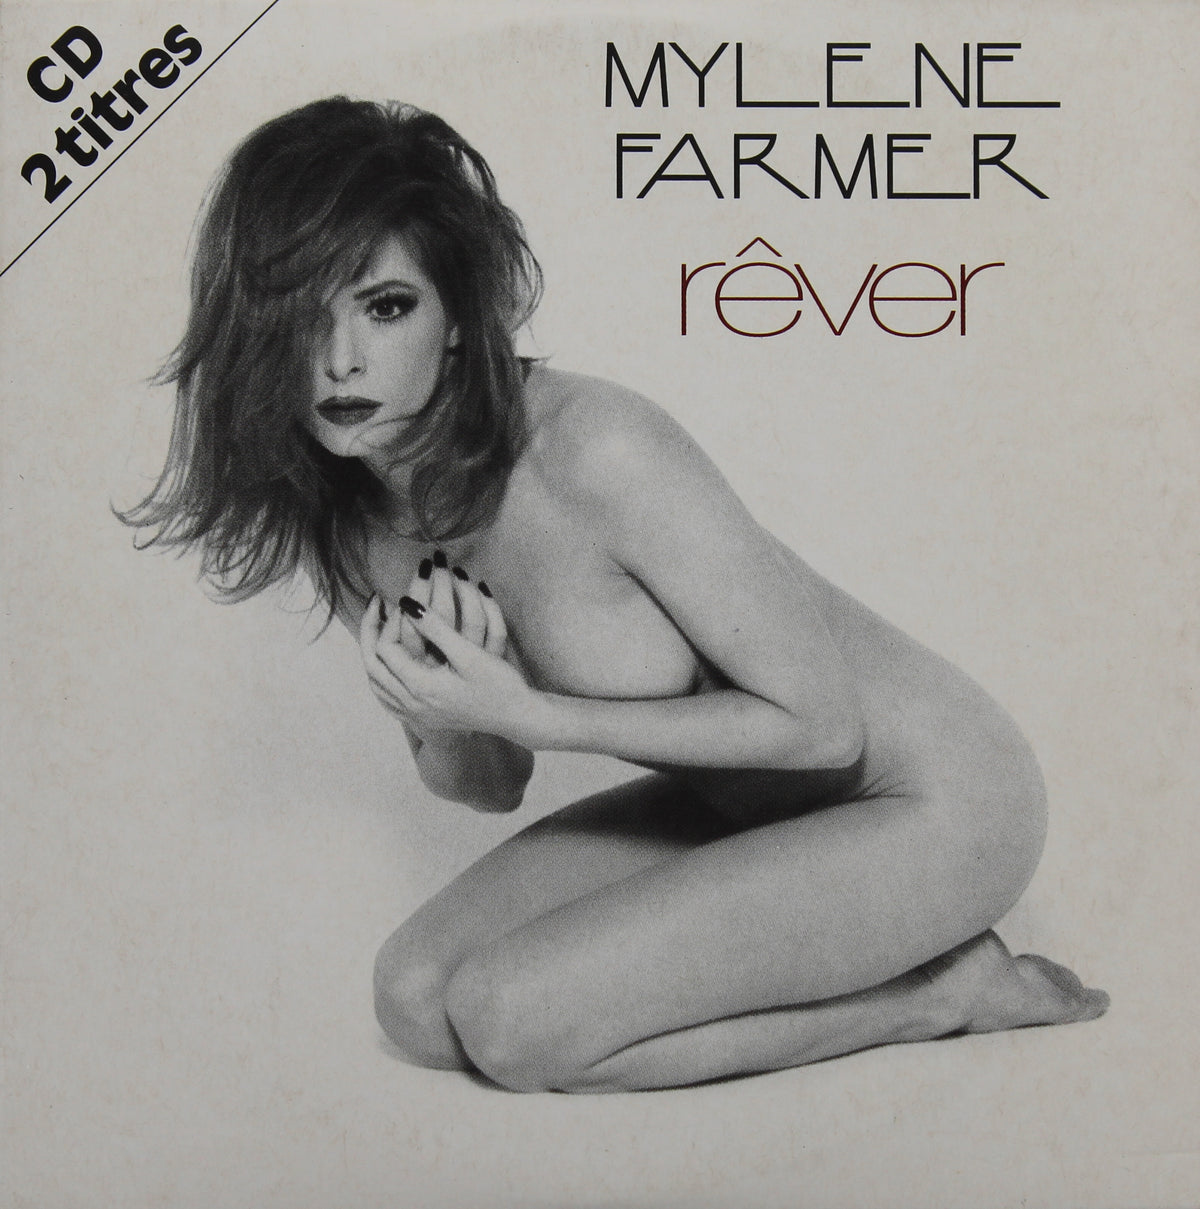 Mylene Farmer – Rêver, CD, Single, France 1996